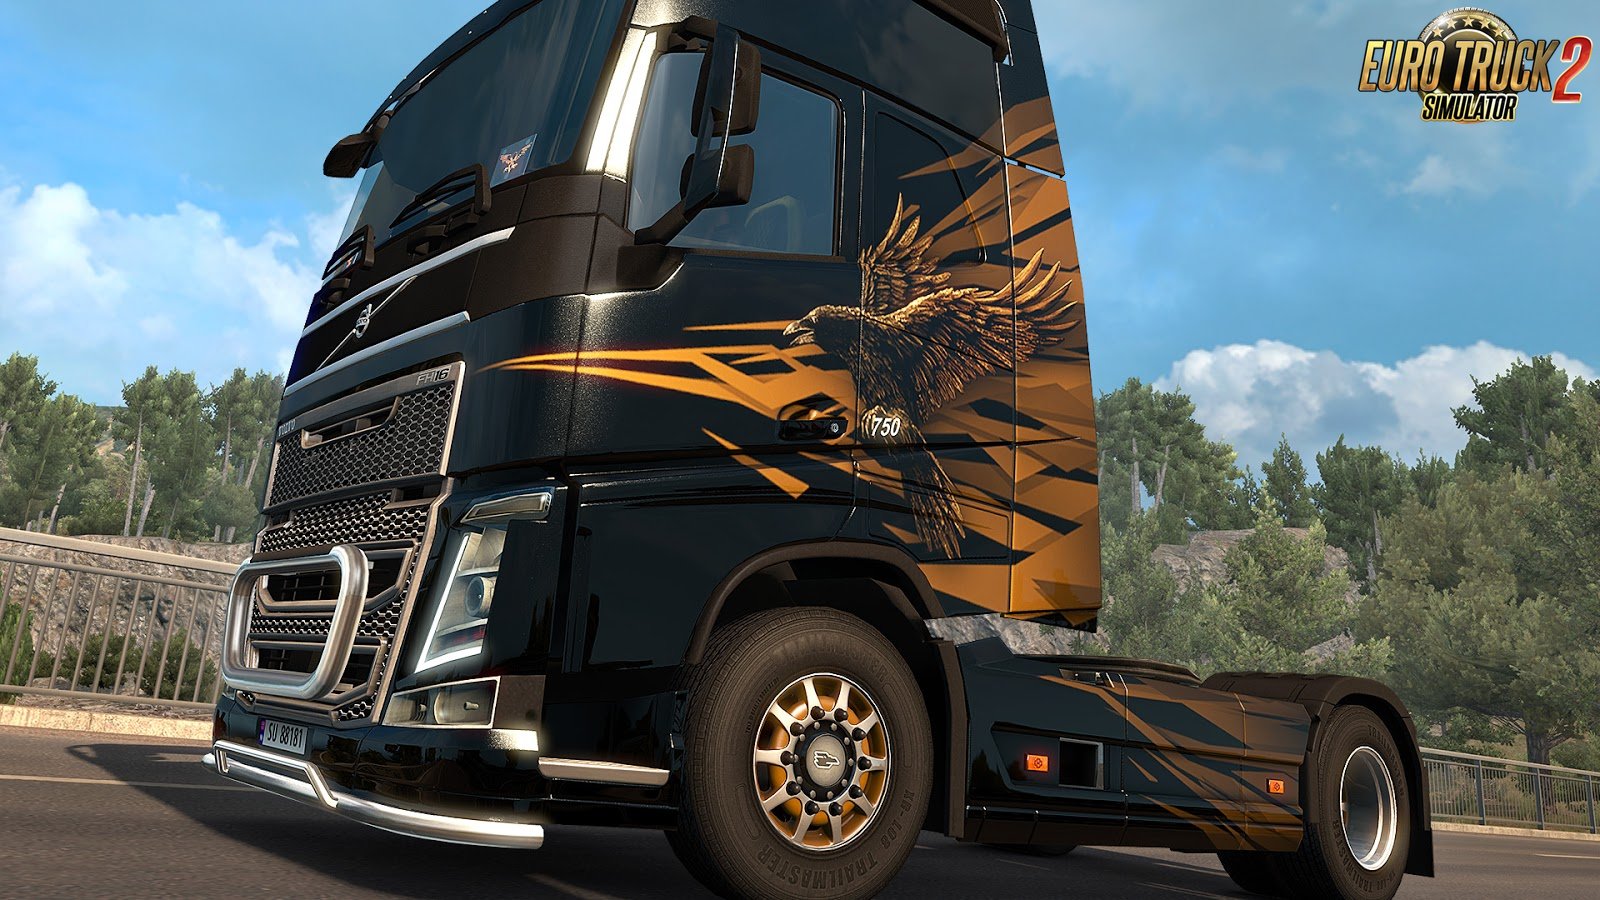 Raven Truck Design DLC released